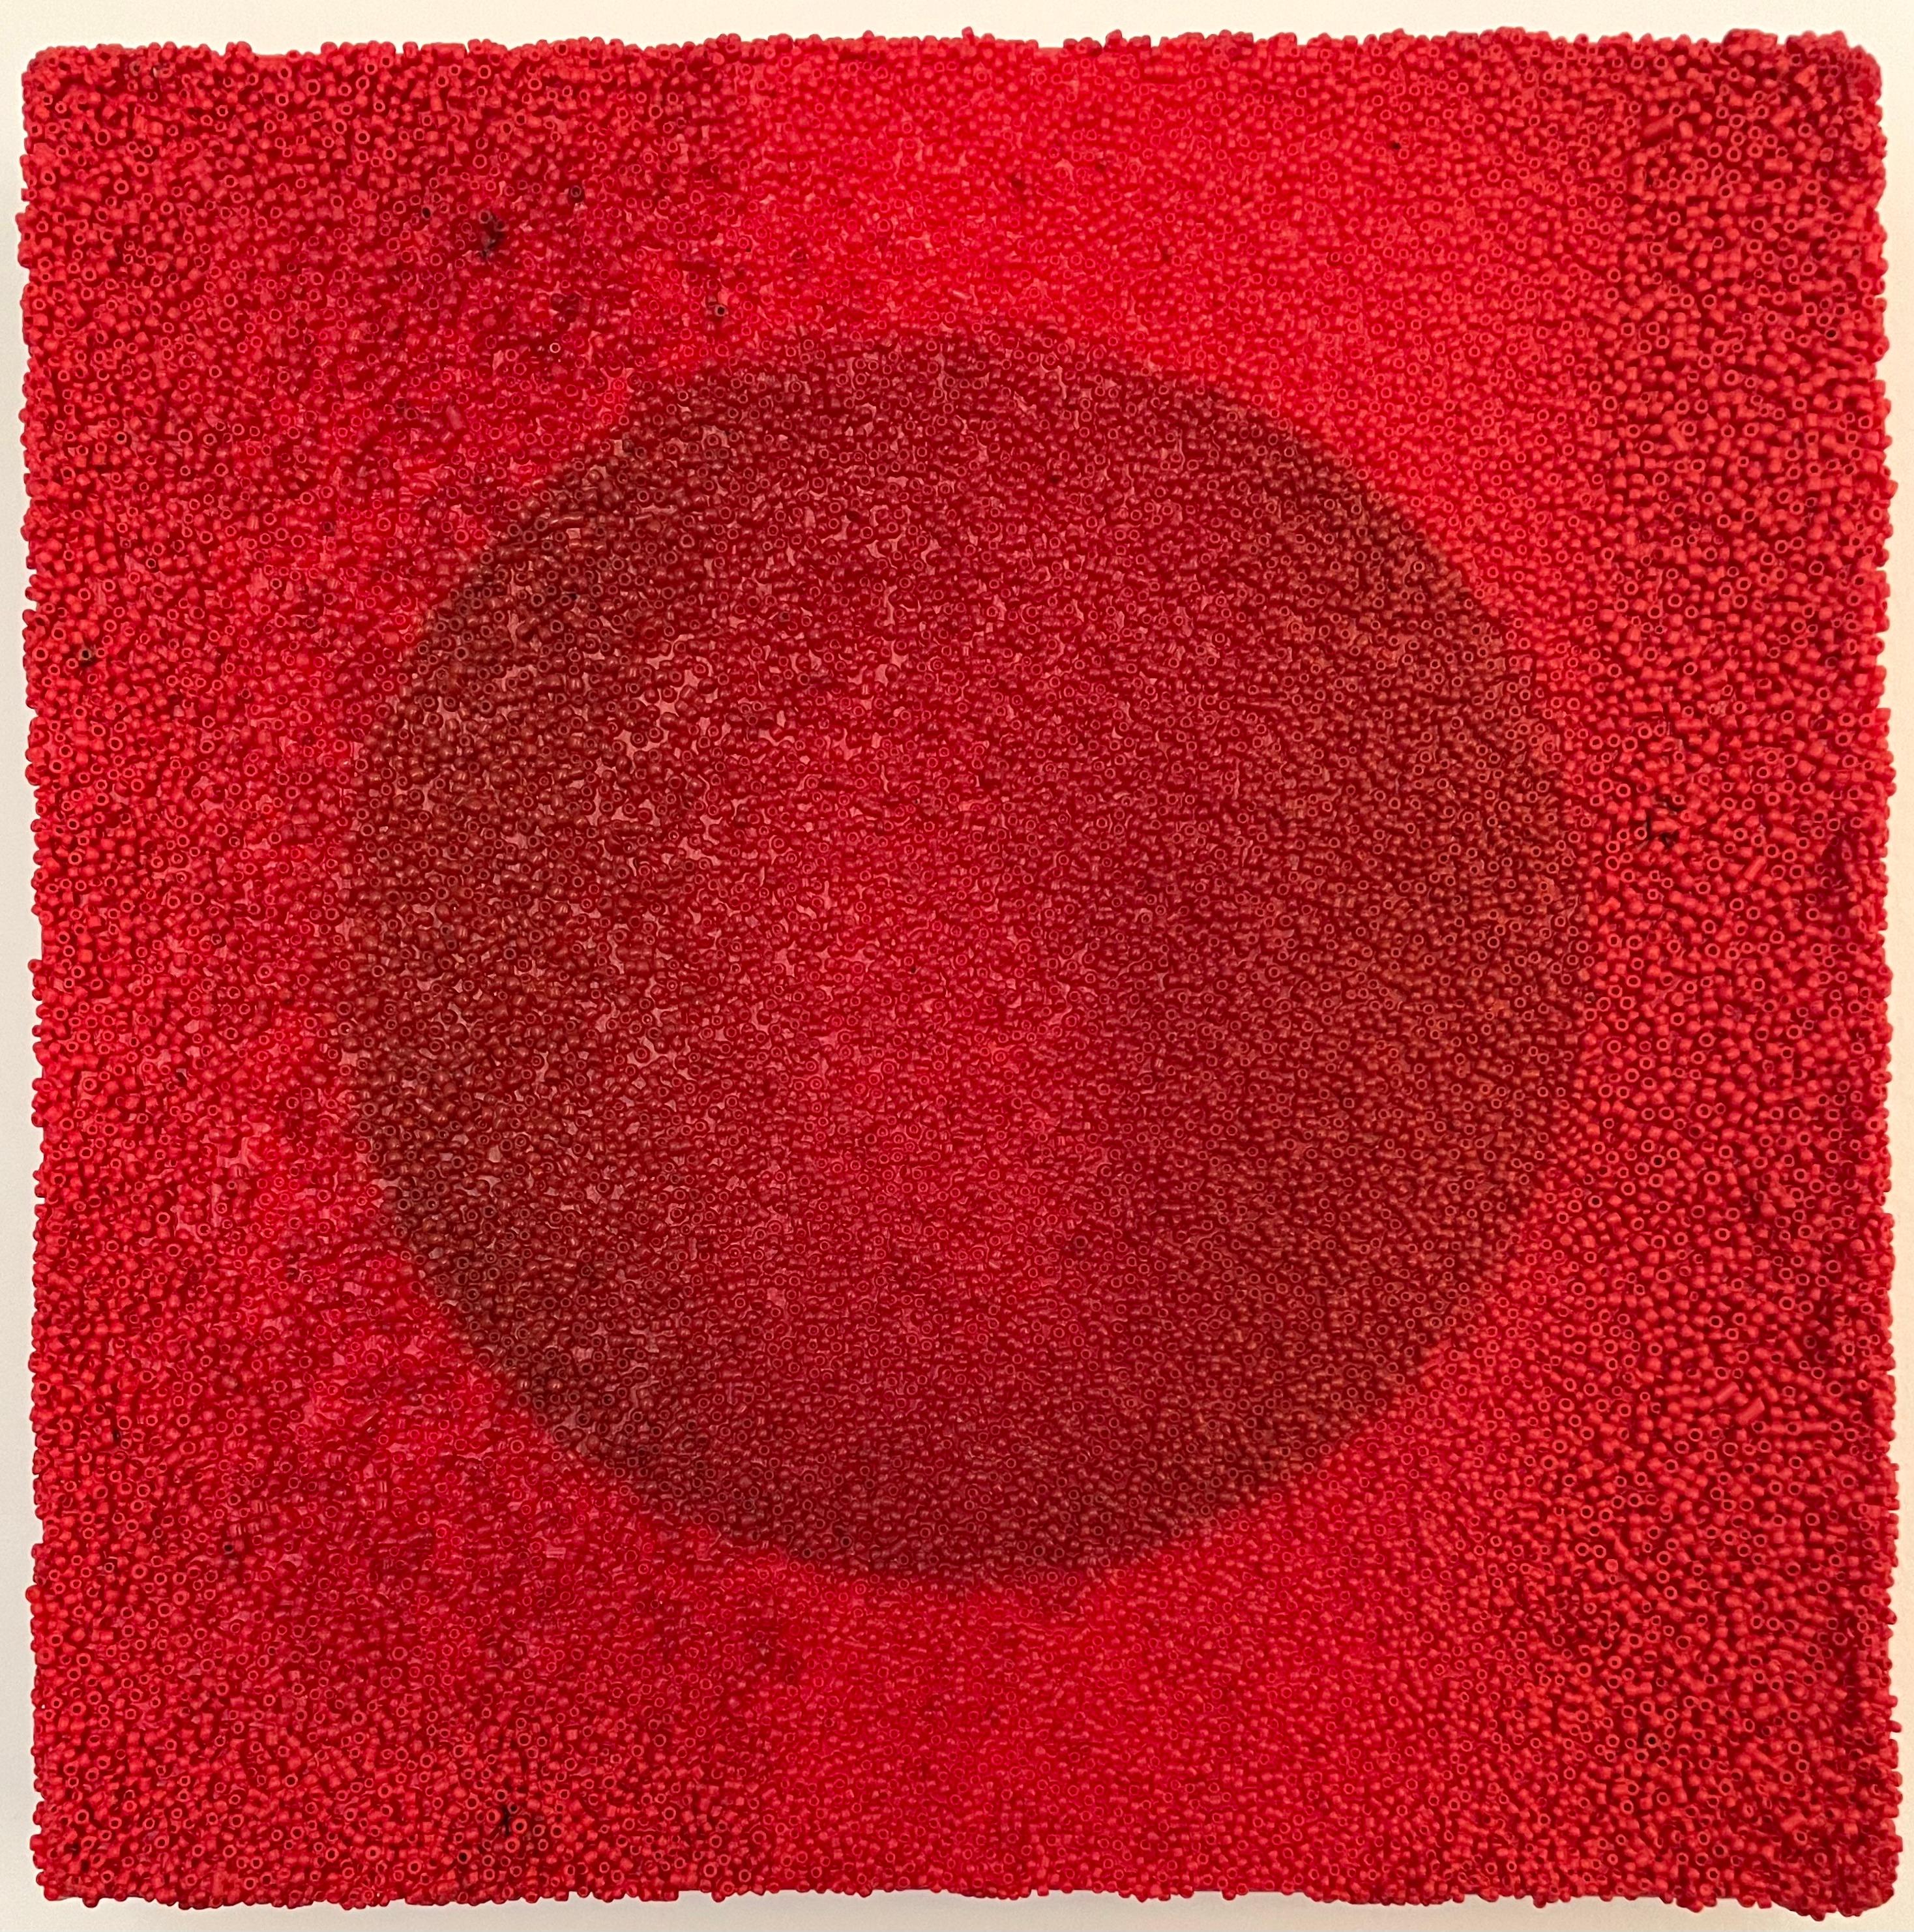 Antonio Puri Abstract Sculpture - Tantra 45: minimalist abstract Pop Art mandala sculpture painting, red circles